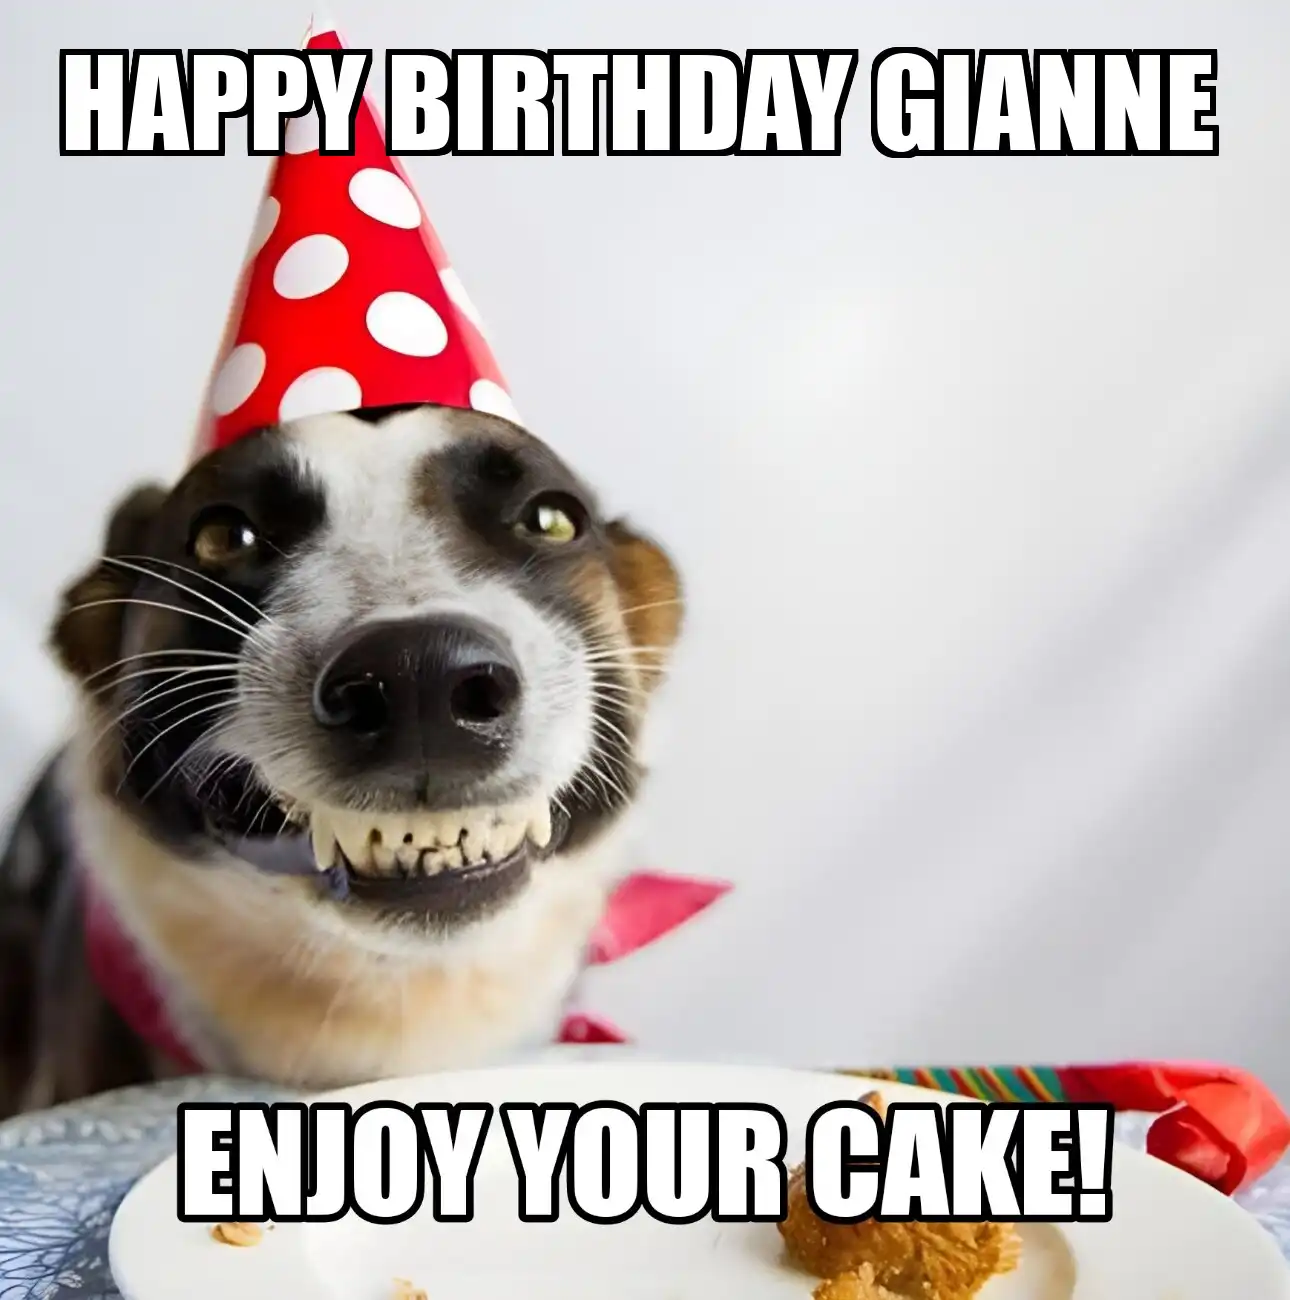 Happy Birthday Gianne Enjoy Your Cake Dog Meme